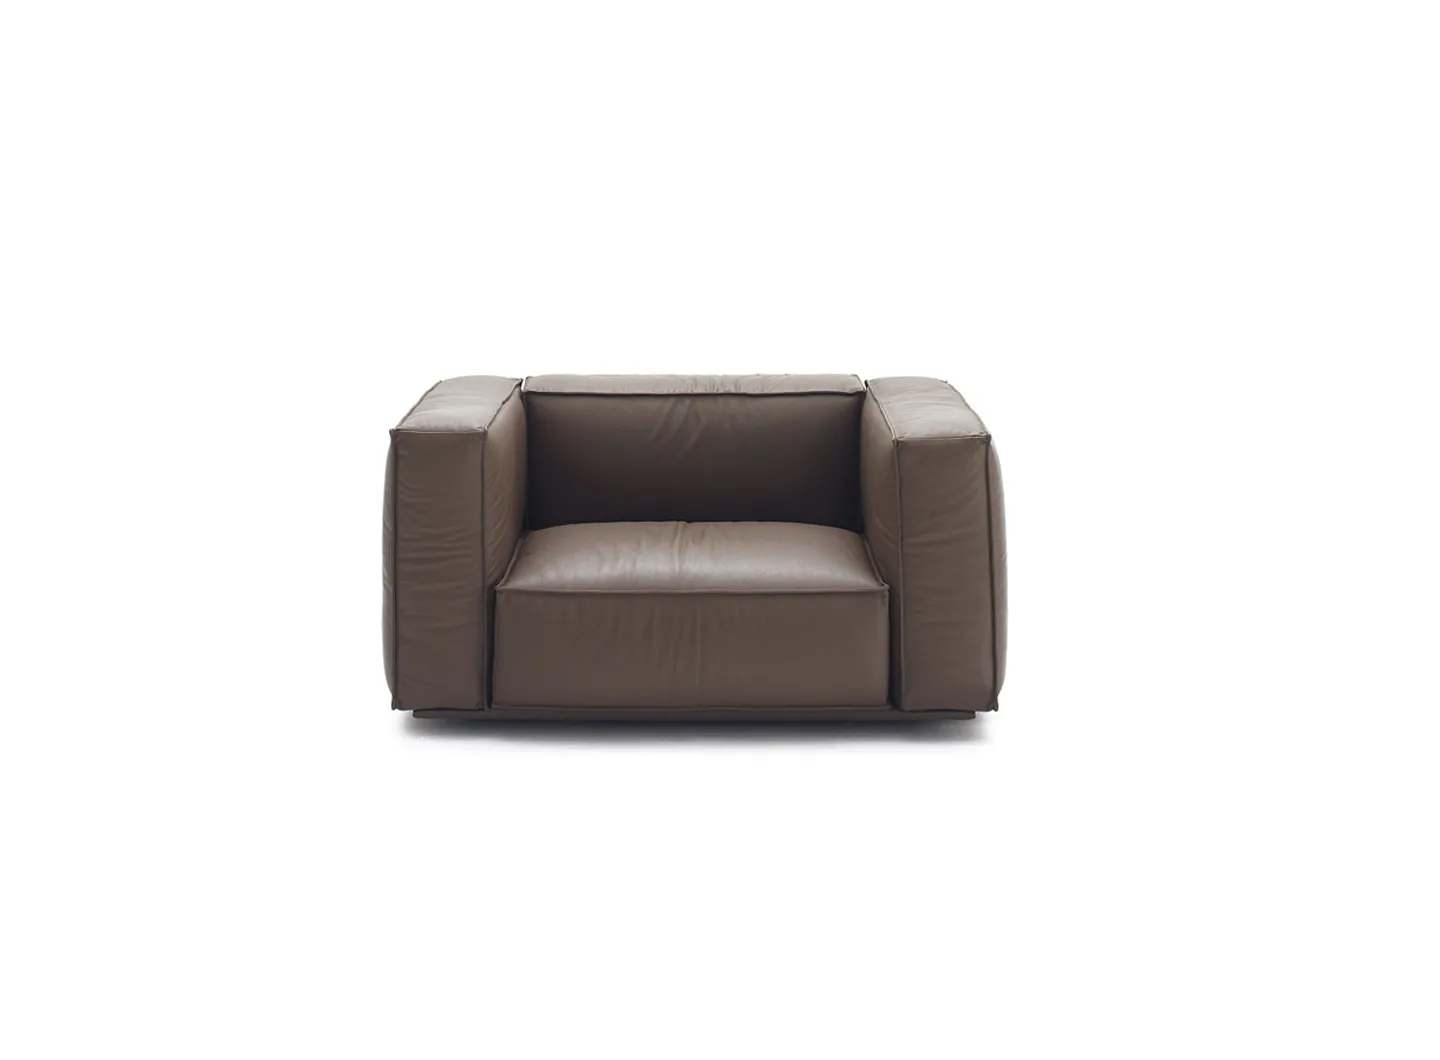 Marechiaro armchair - Leather version